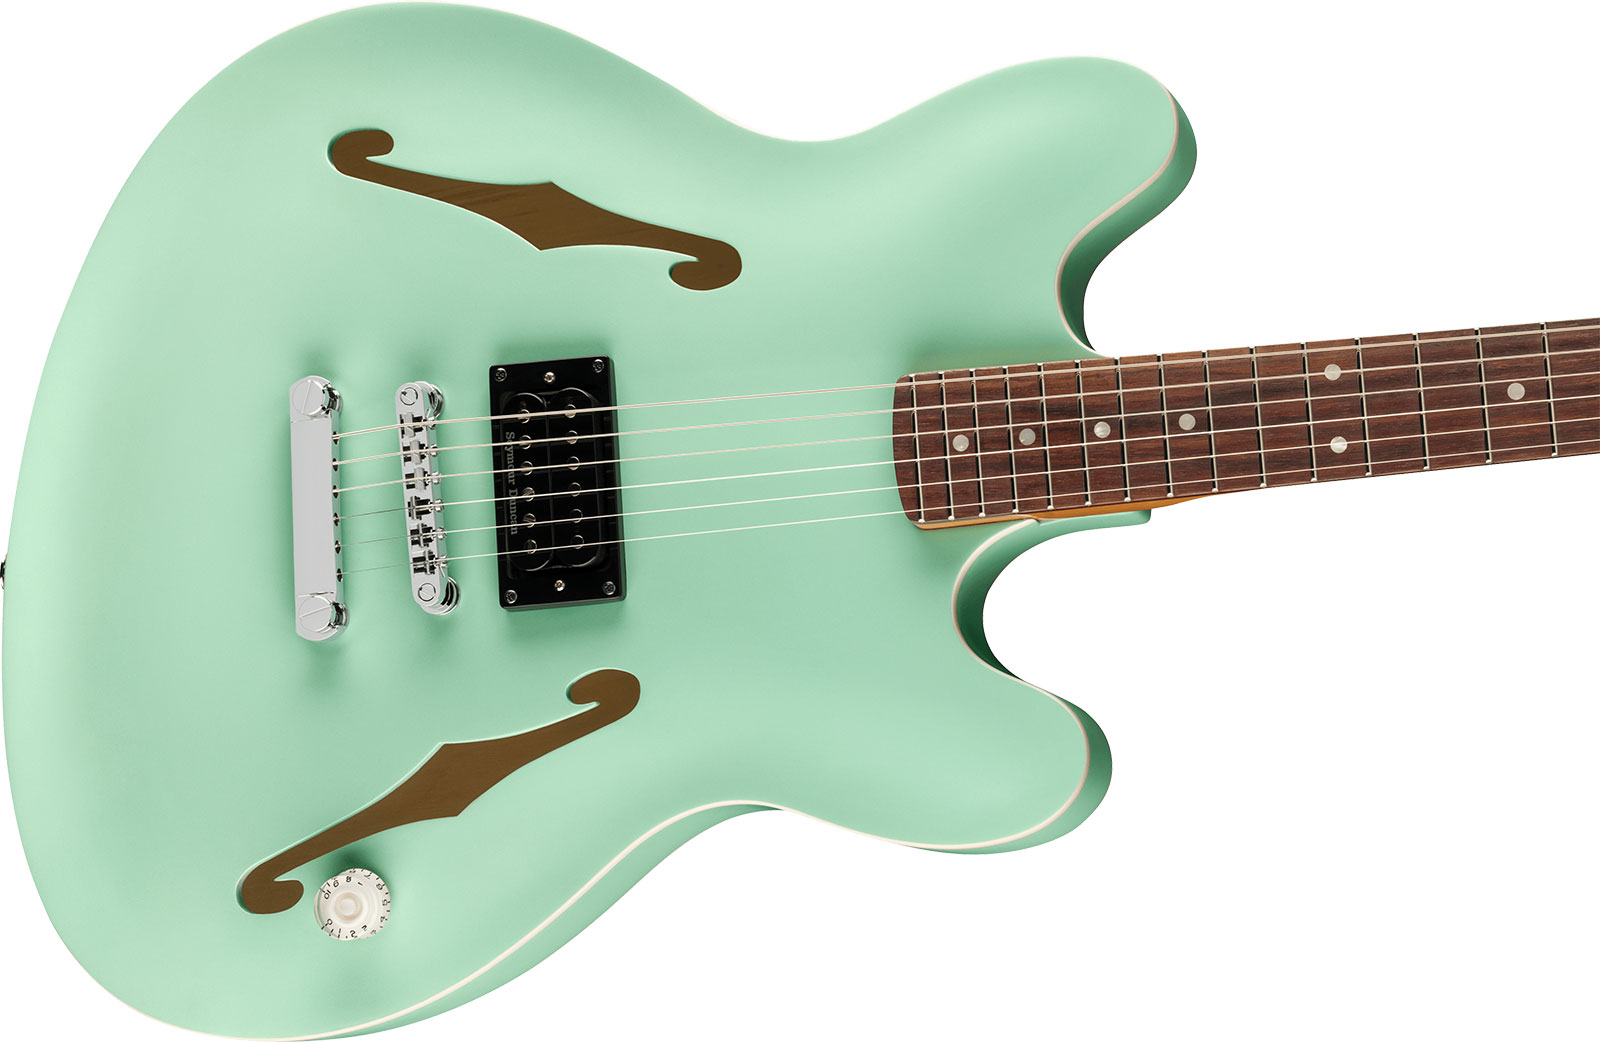 Fender Tom Delonge Starcaster 1h Seymour Duncan Ht Rw - Satin Surf Green - Semi hollow elektriche gitaar - Variation 2